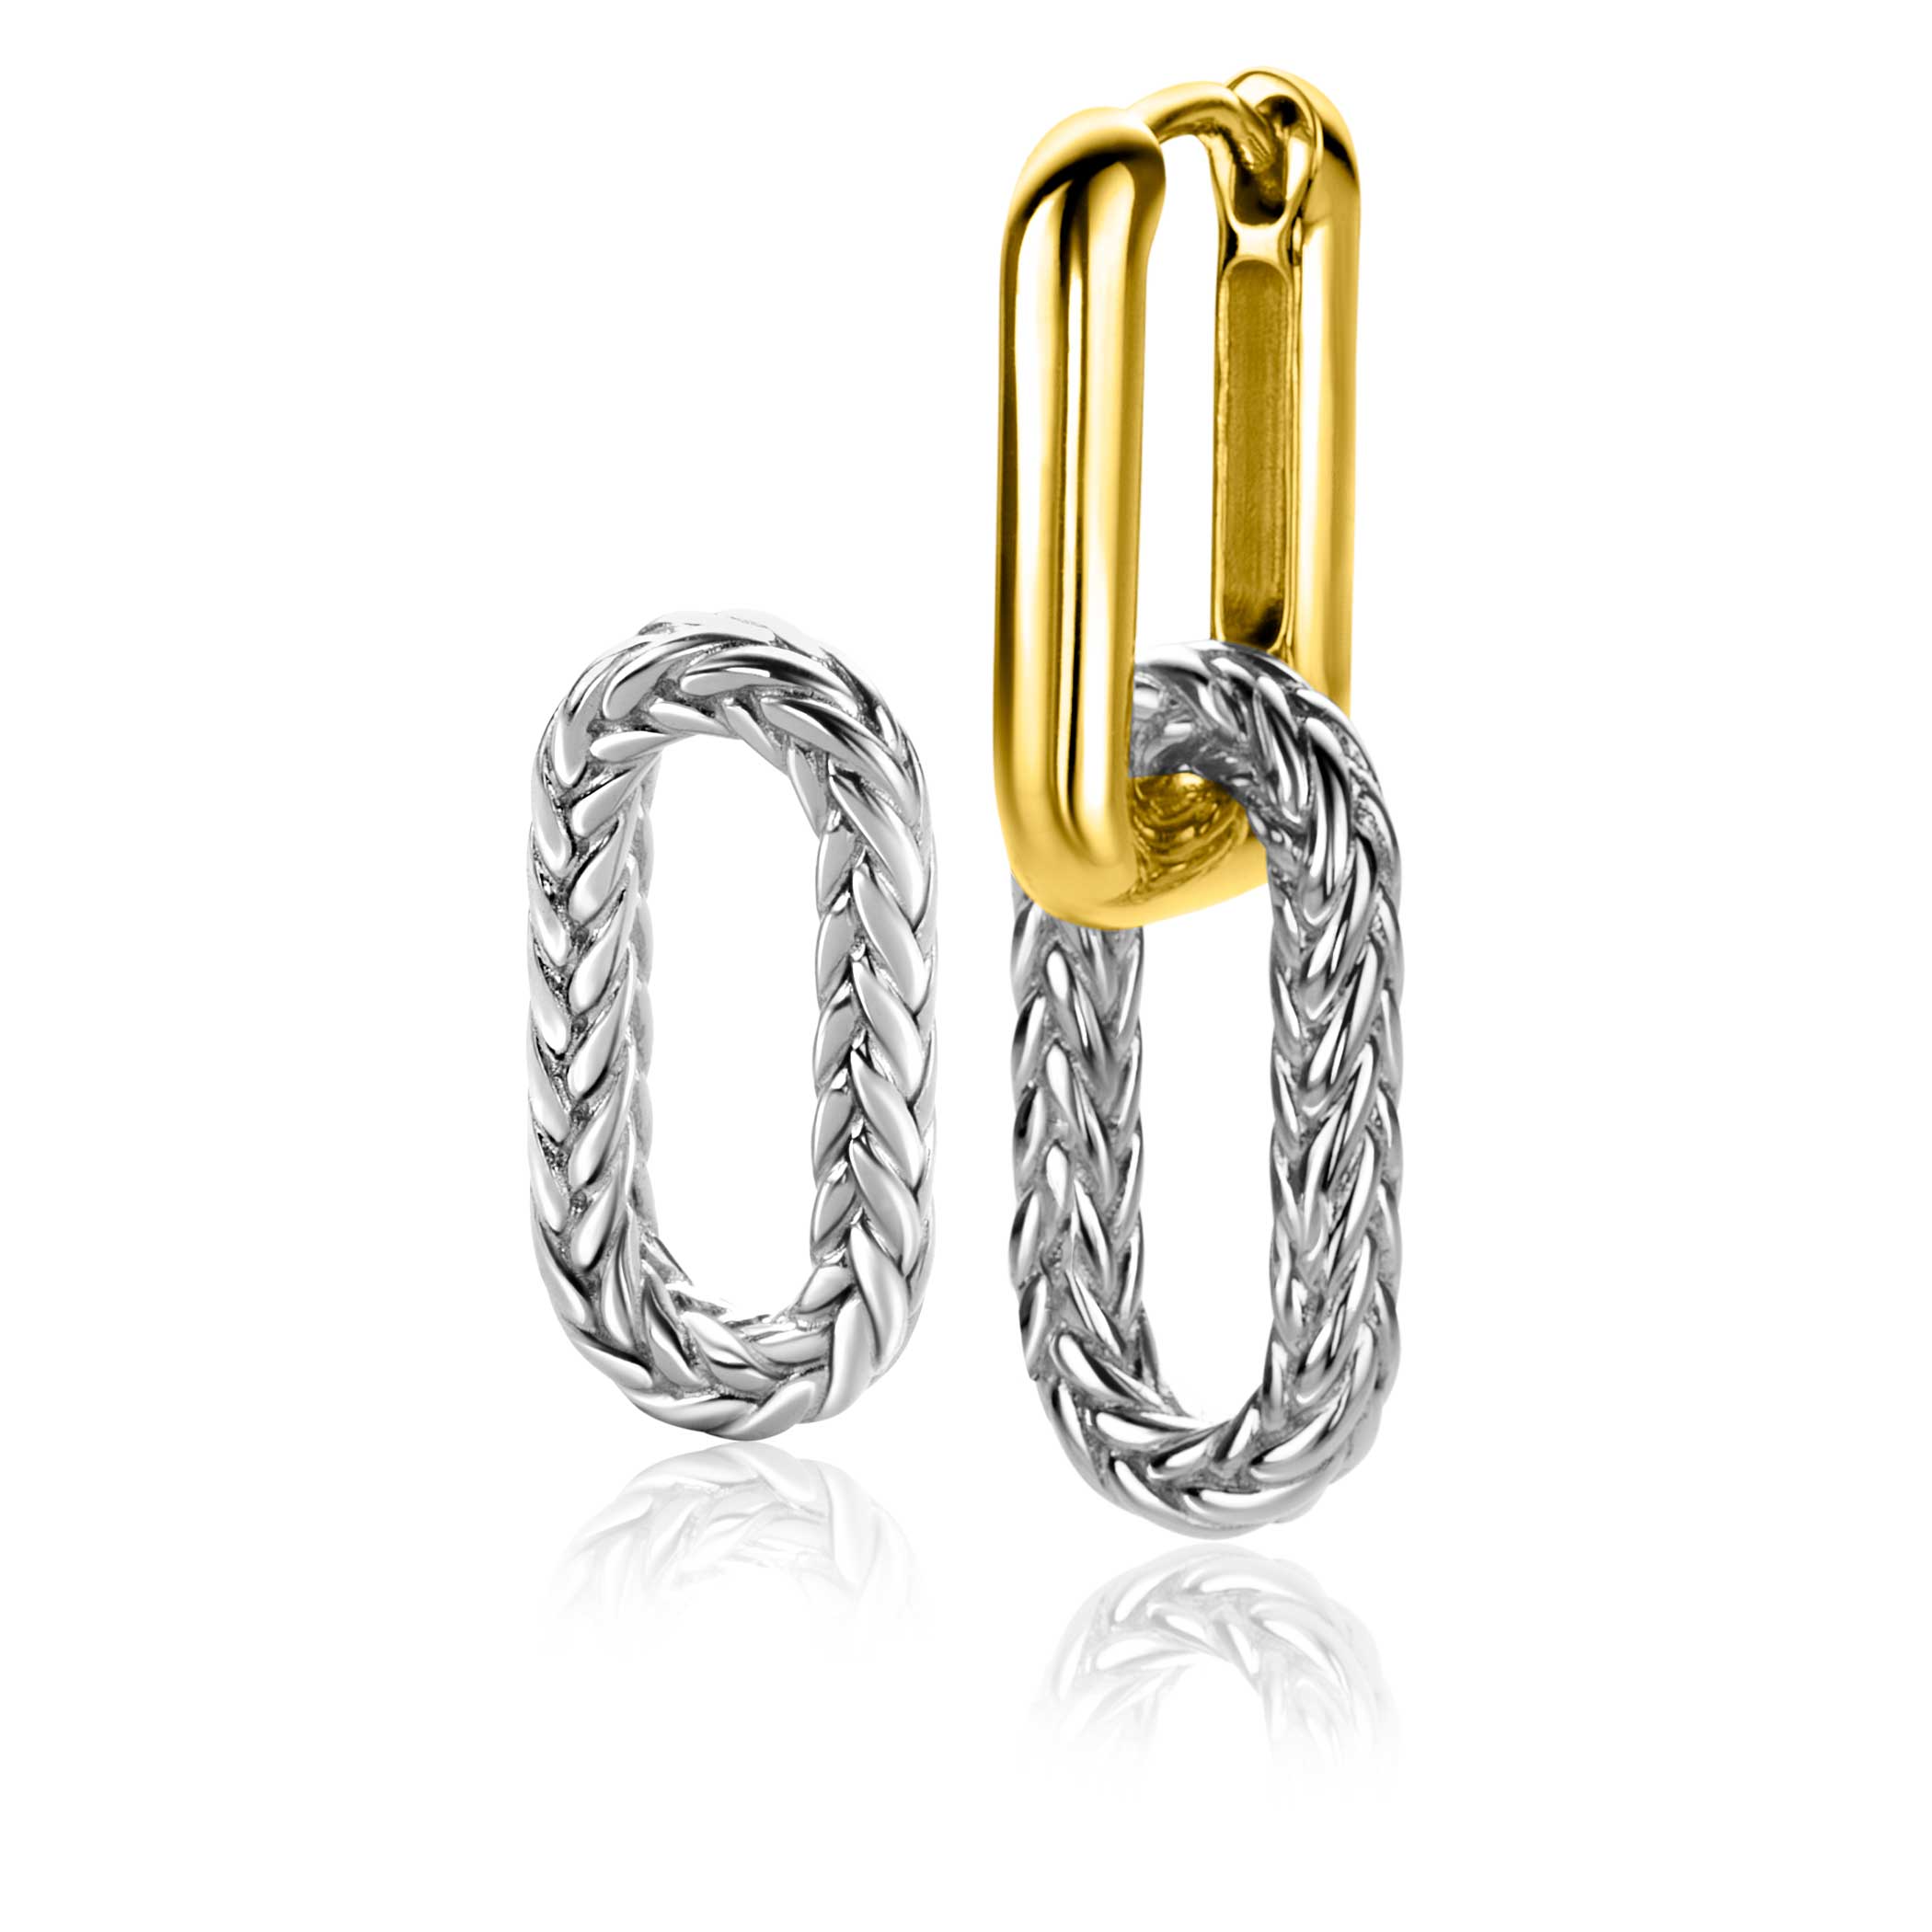 20mm ZINZI Sterling Silver Earrings Pendants Oval with Rope Design ZICH2553 (excl. hoop earrings)